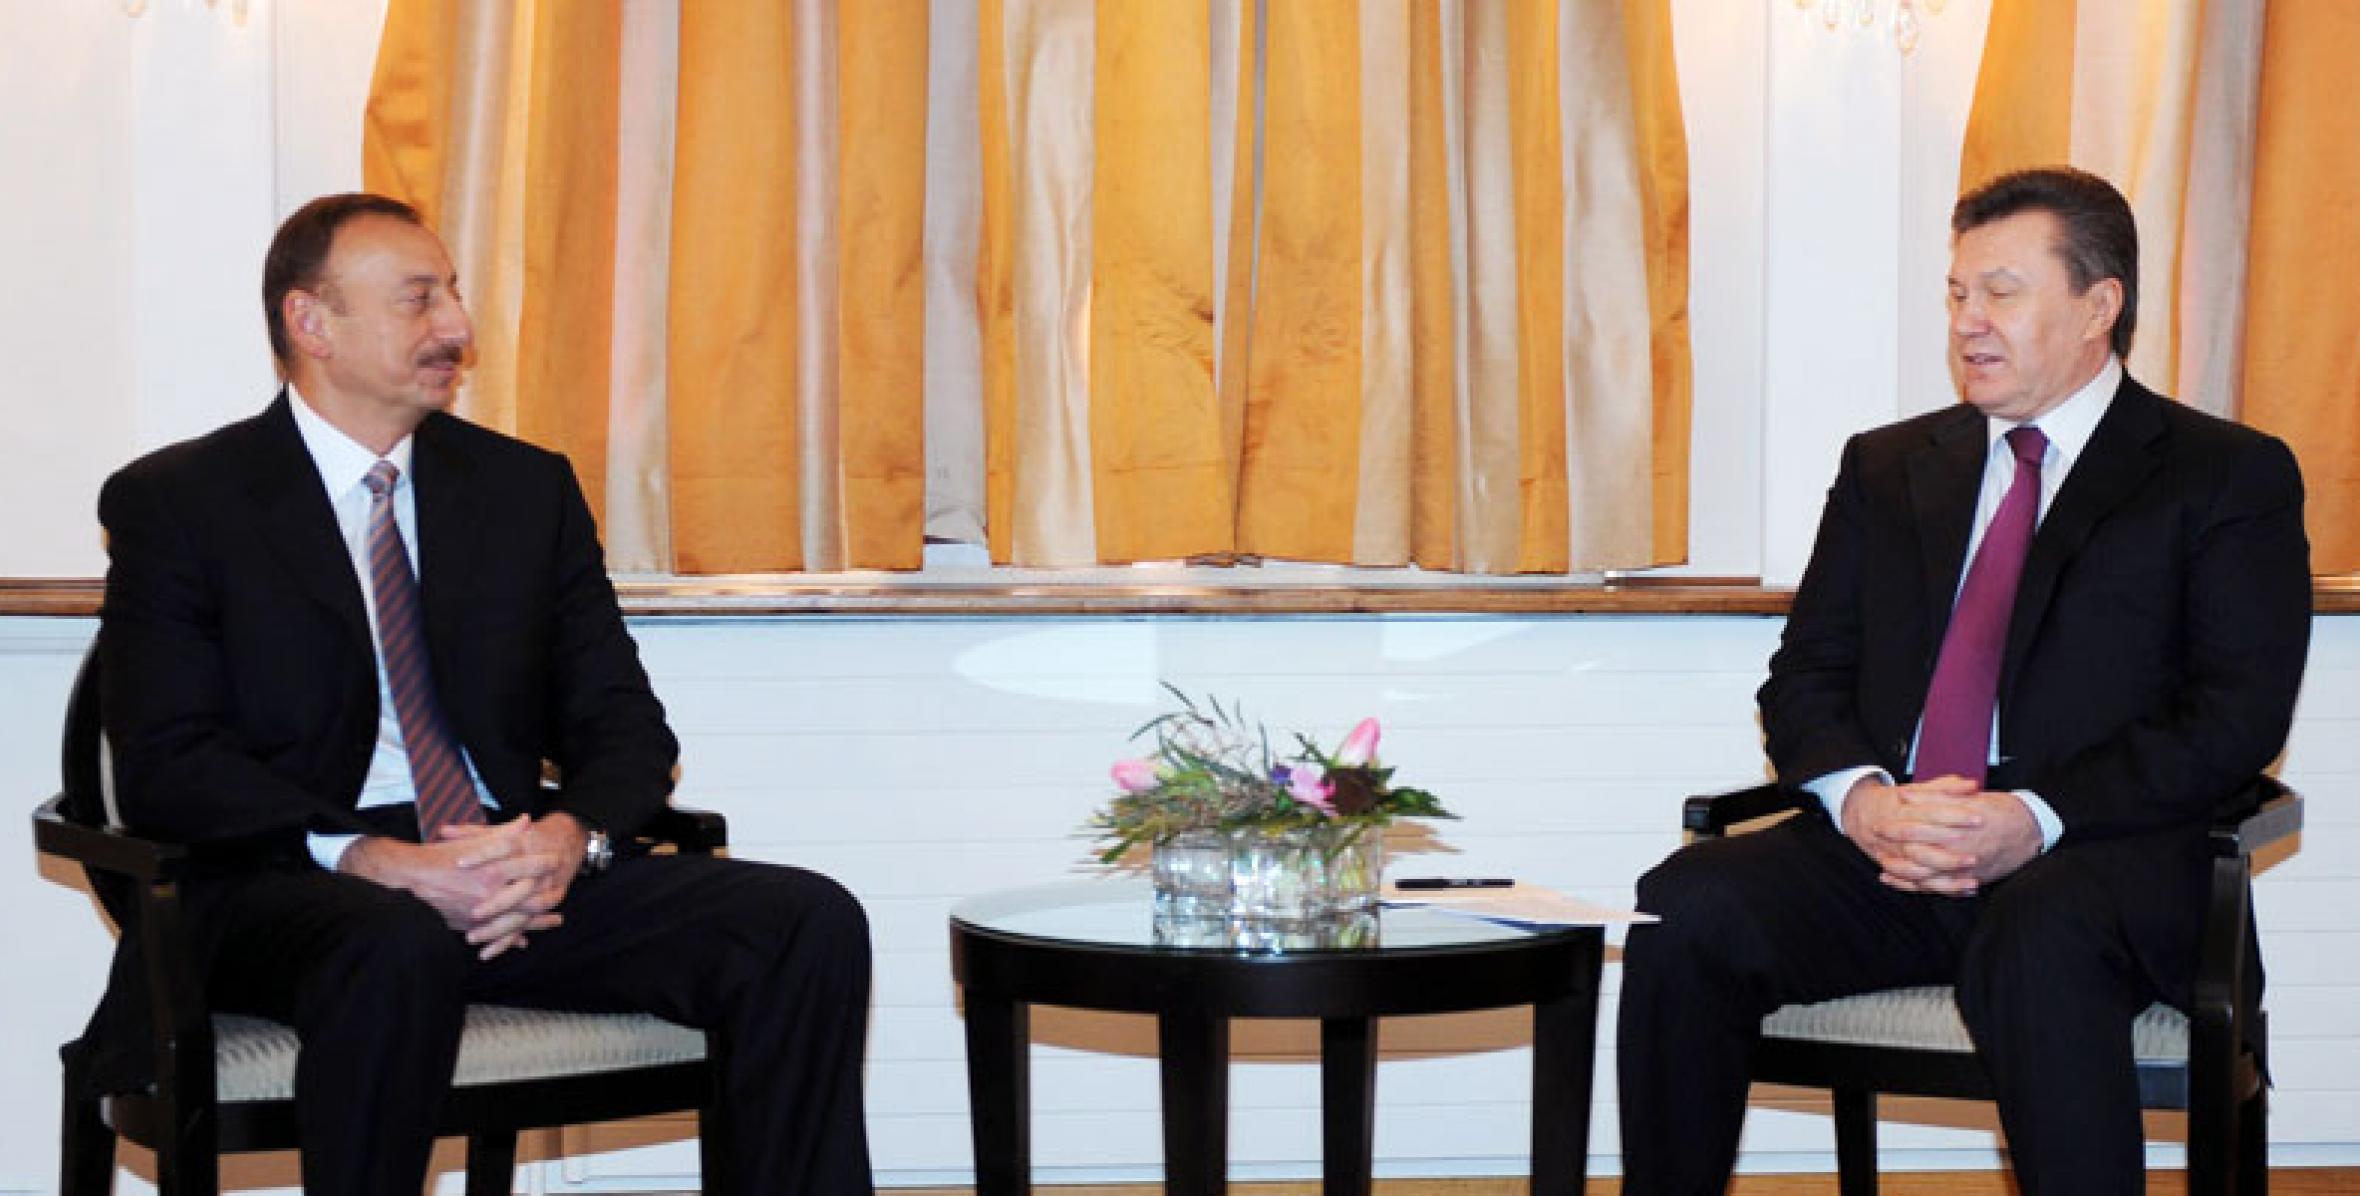 Ilham Aliyev met with President of Ukraine, Viktor Yanukovych